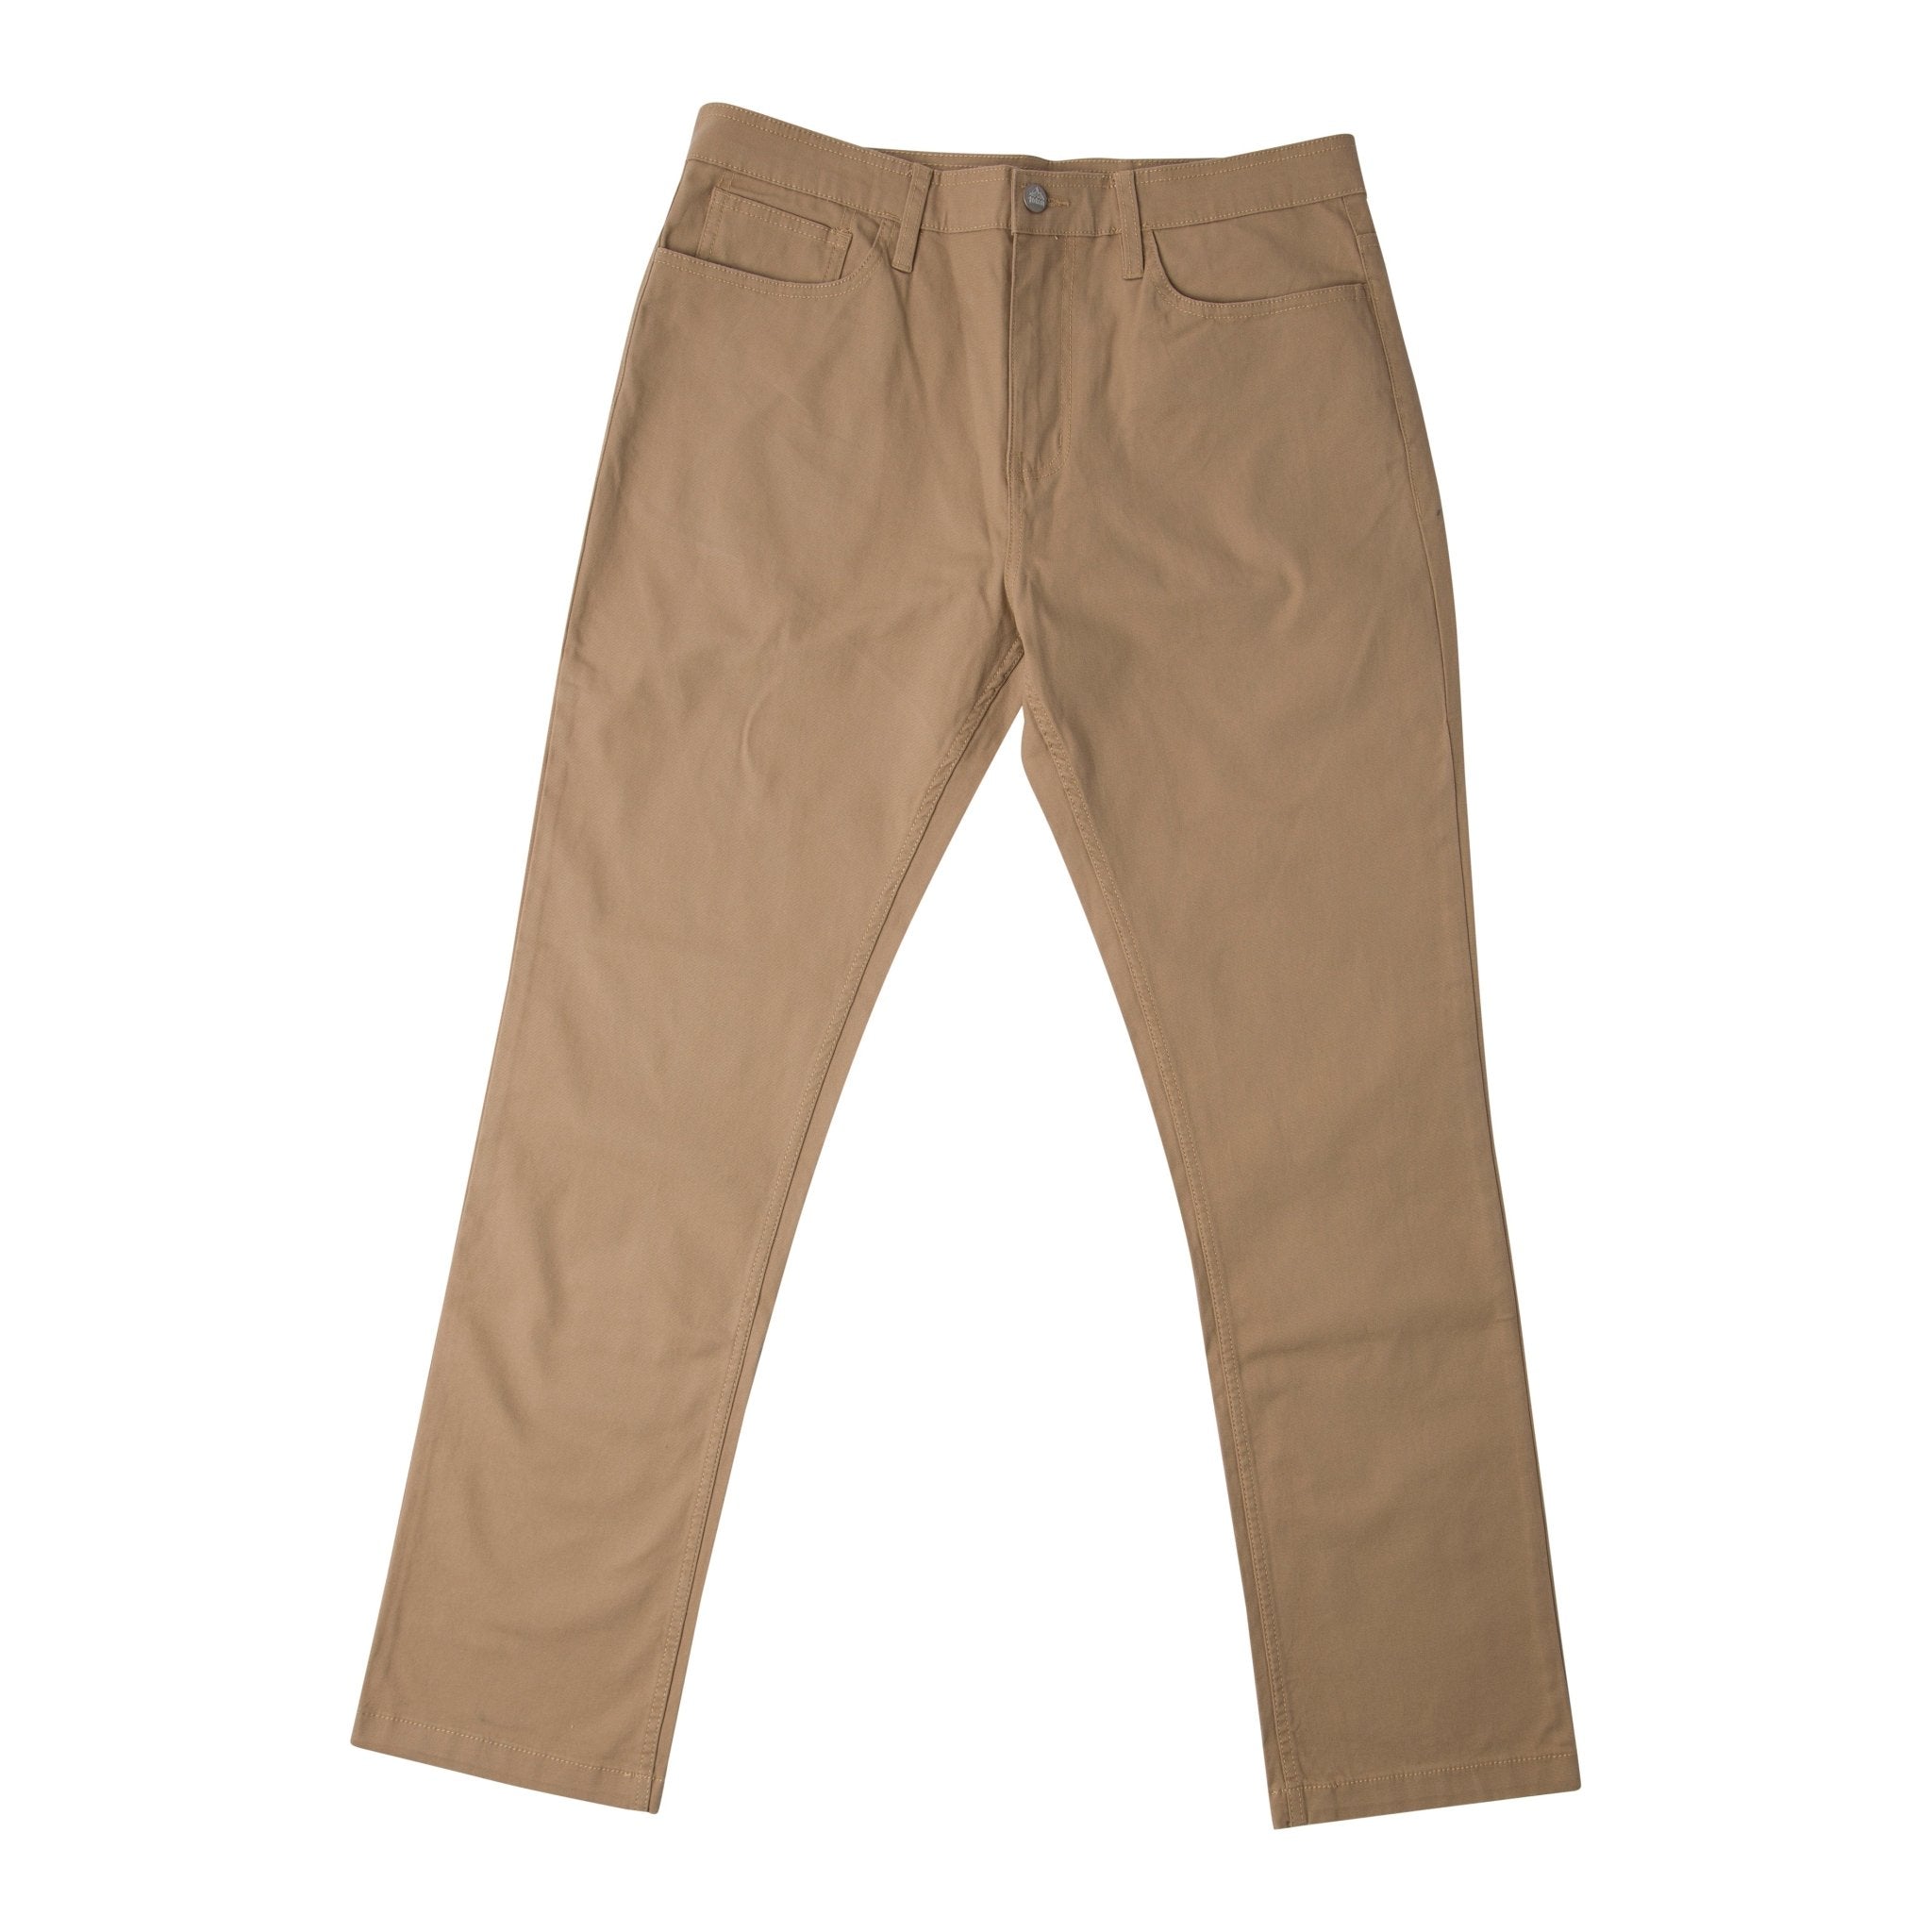 Ketchikan 5 Pocket Work Pants - Straight Fit - Teton Gravity Research